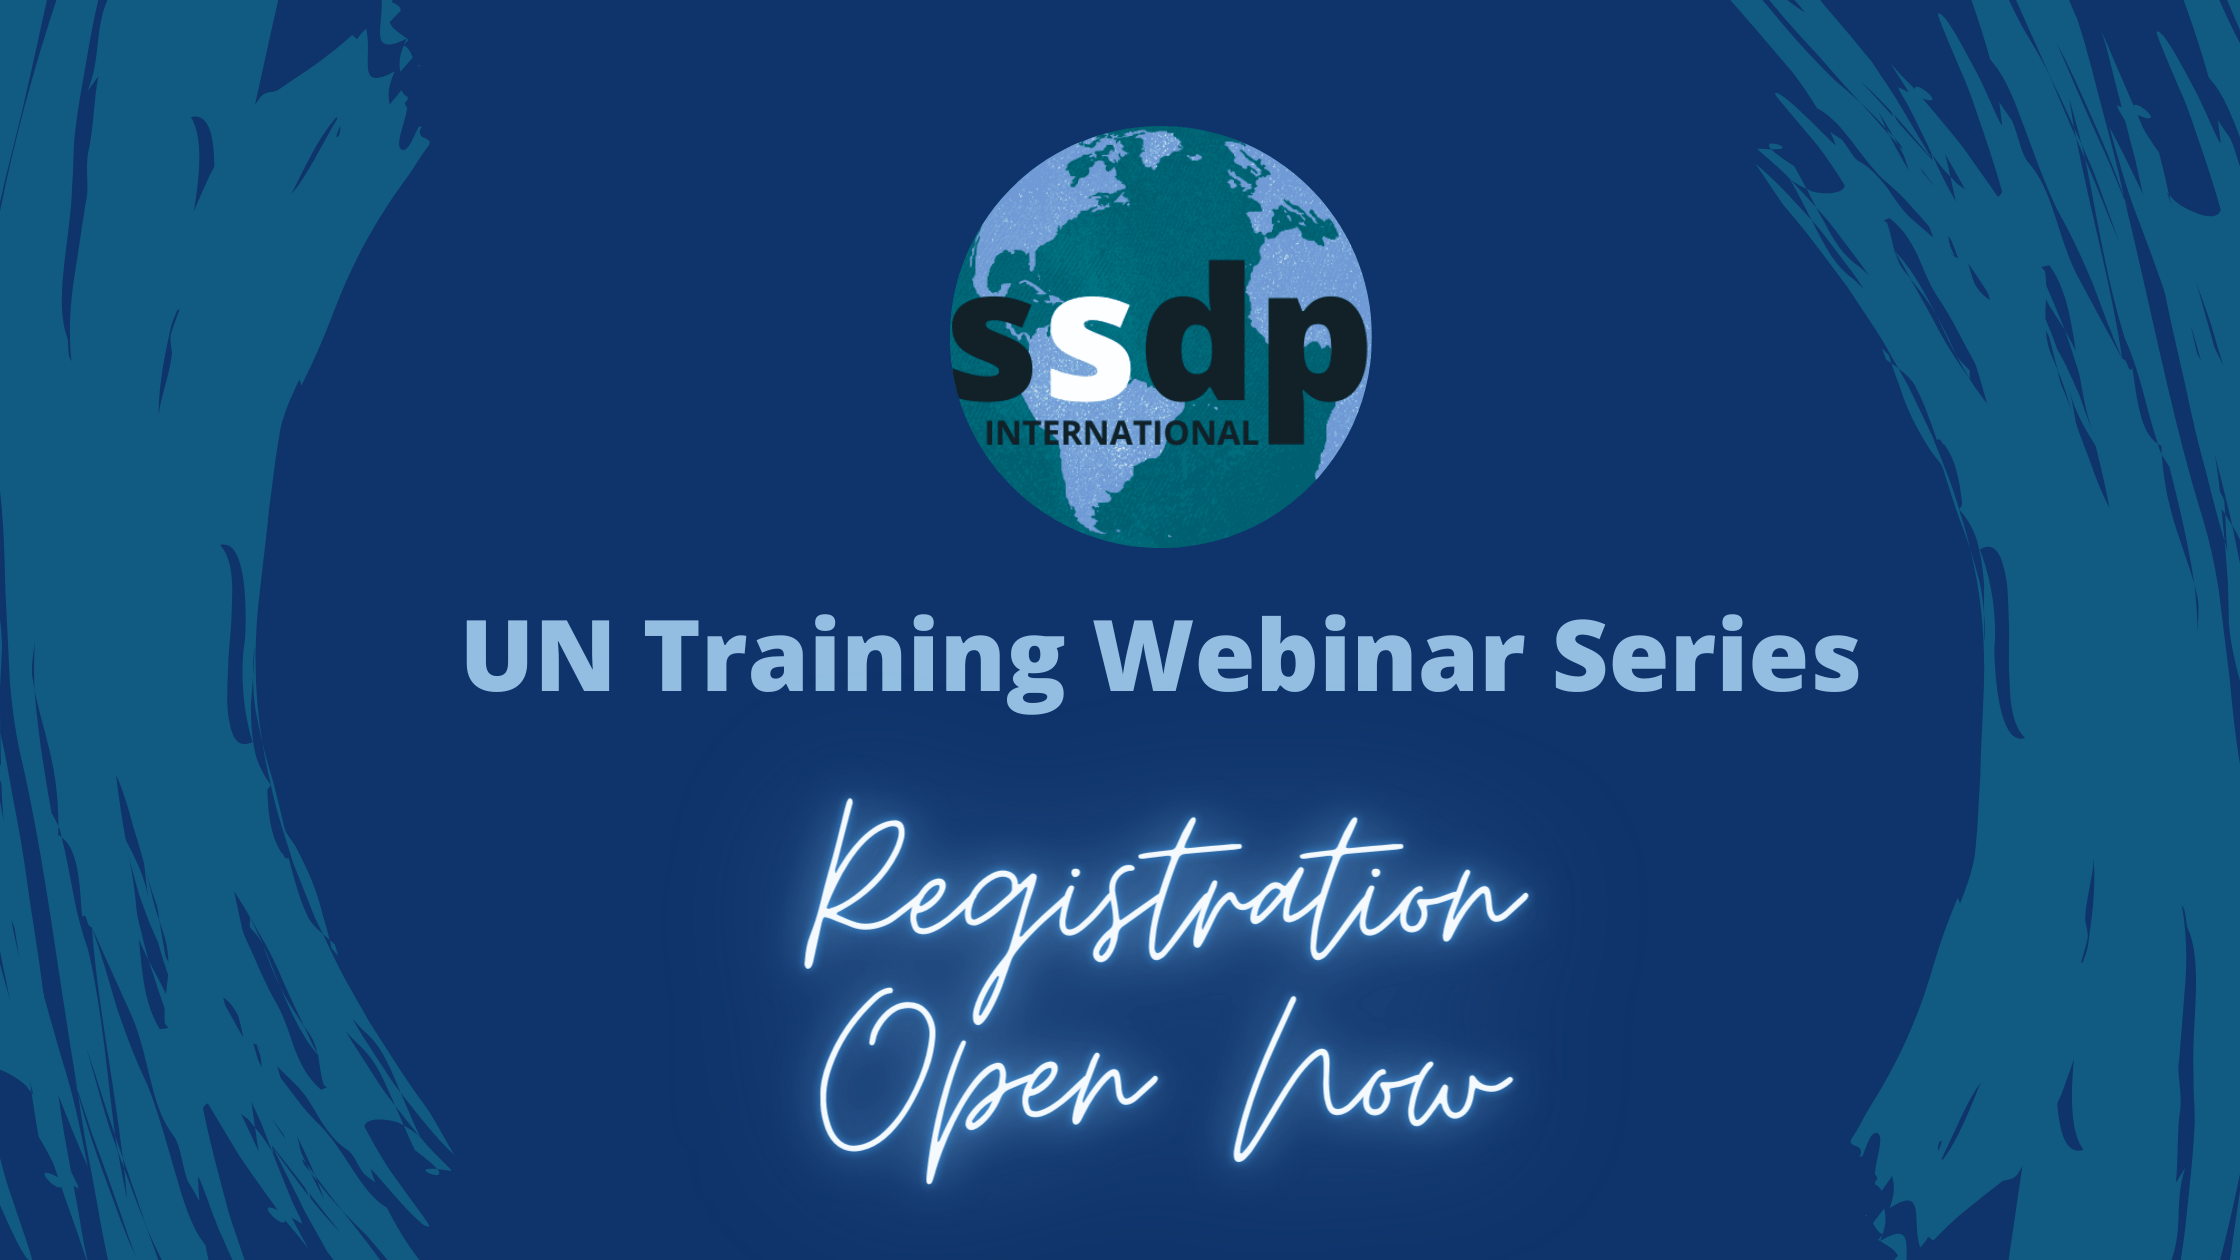 UN Training Webinar Series Registration Open Now